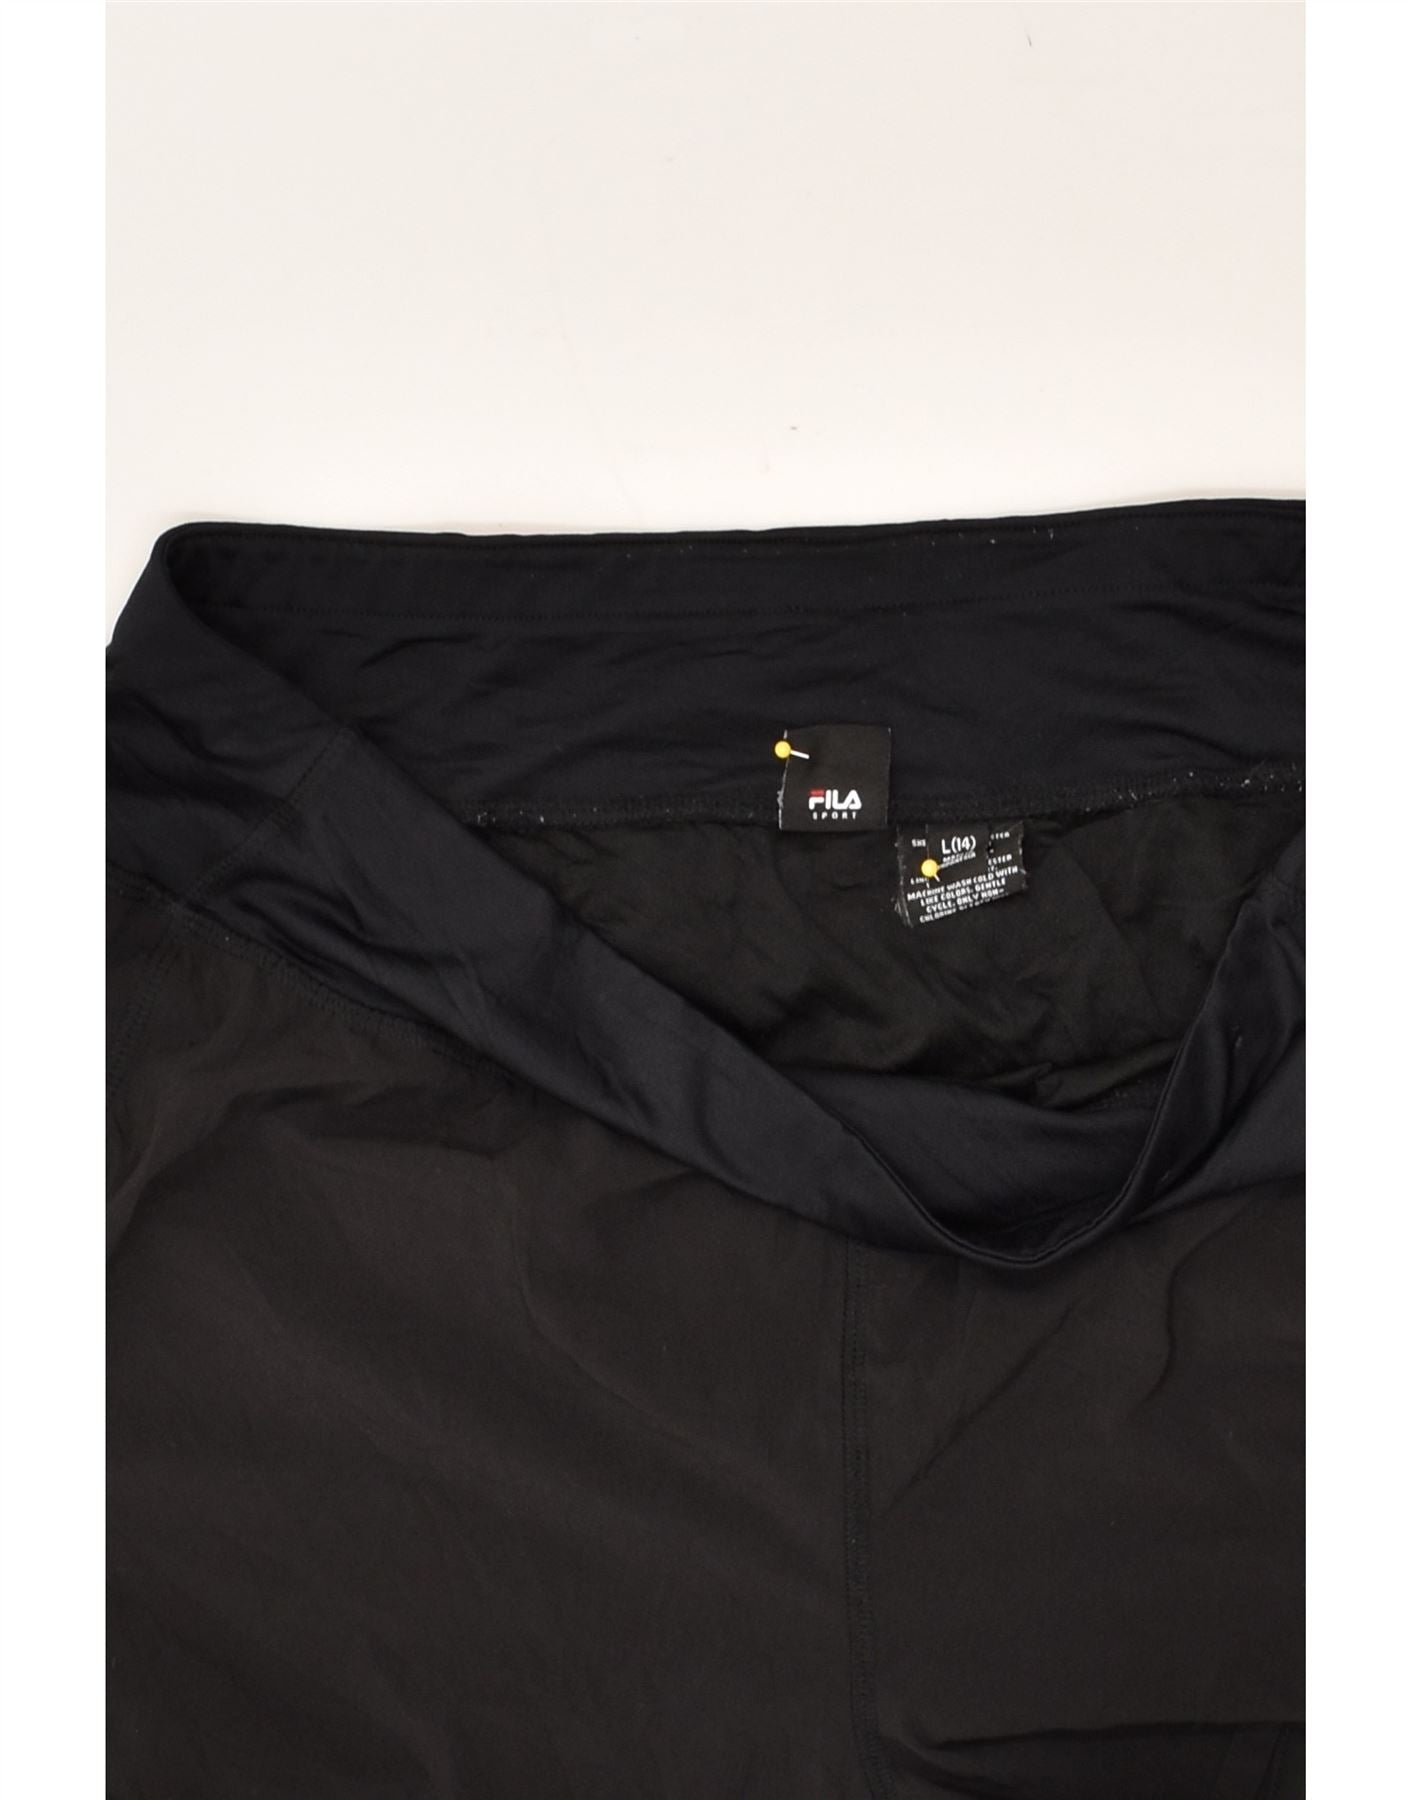 FILA Womens Sport Shorts UK 14 Large Black Polyester